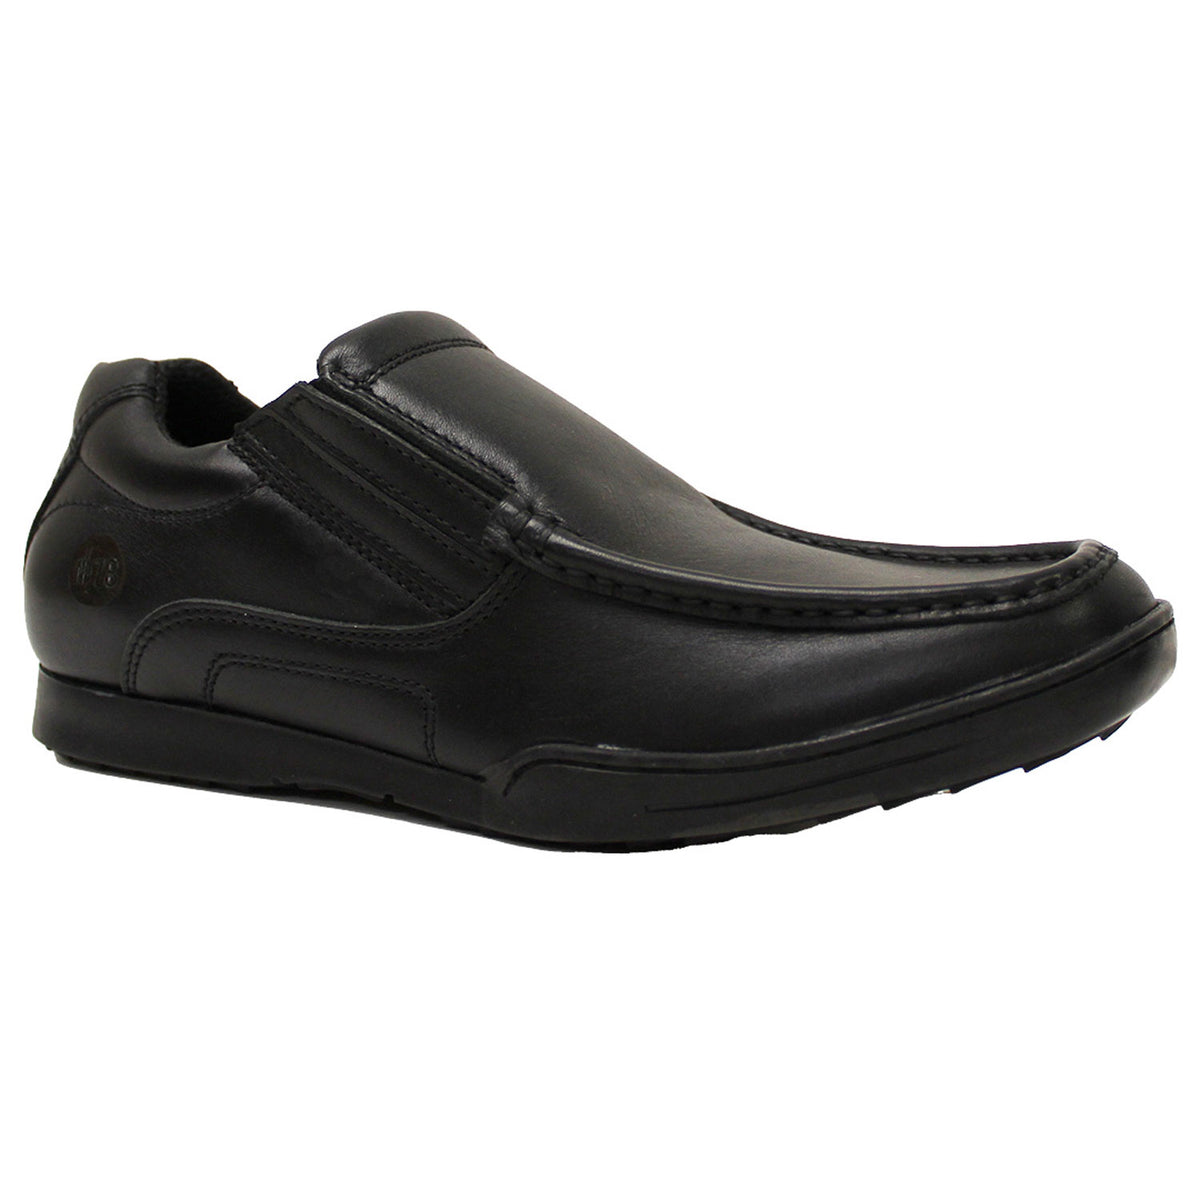 Slip-on School Shoe - Black